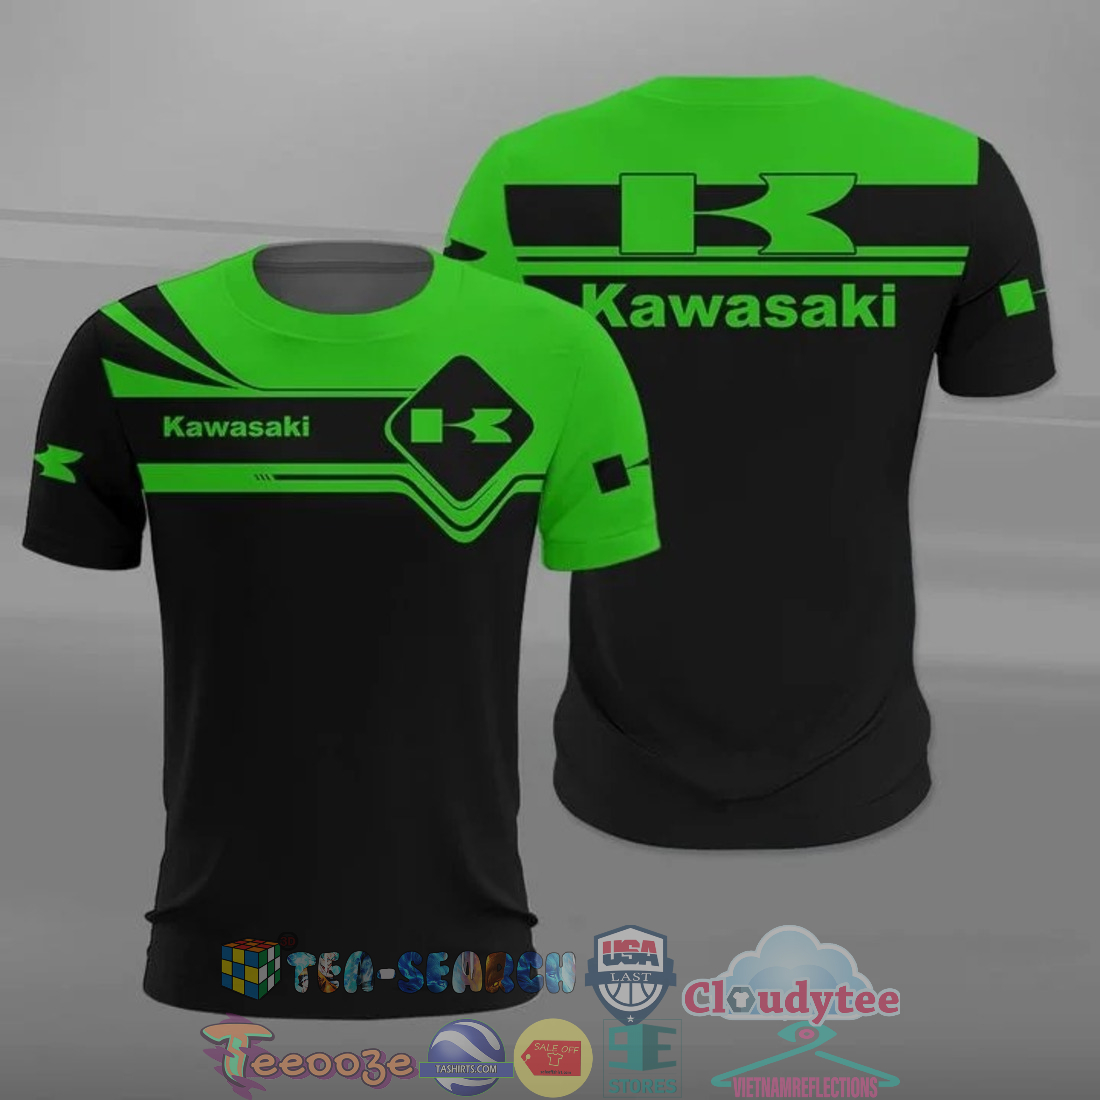 Kawasaki all over printed t-shirt hoodie